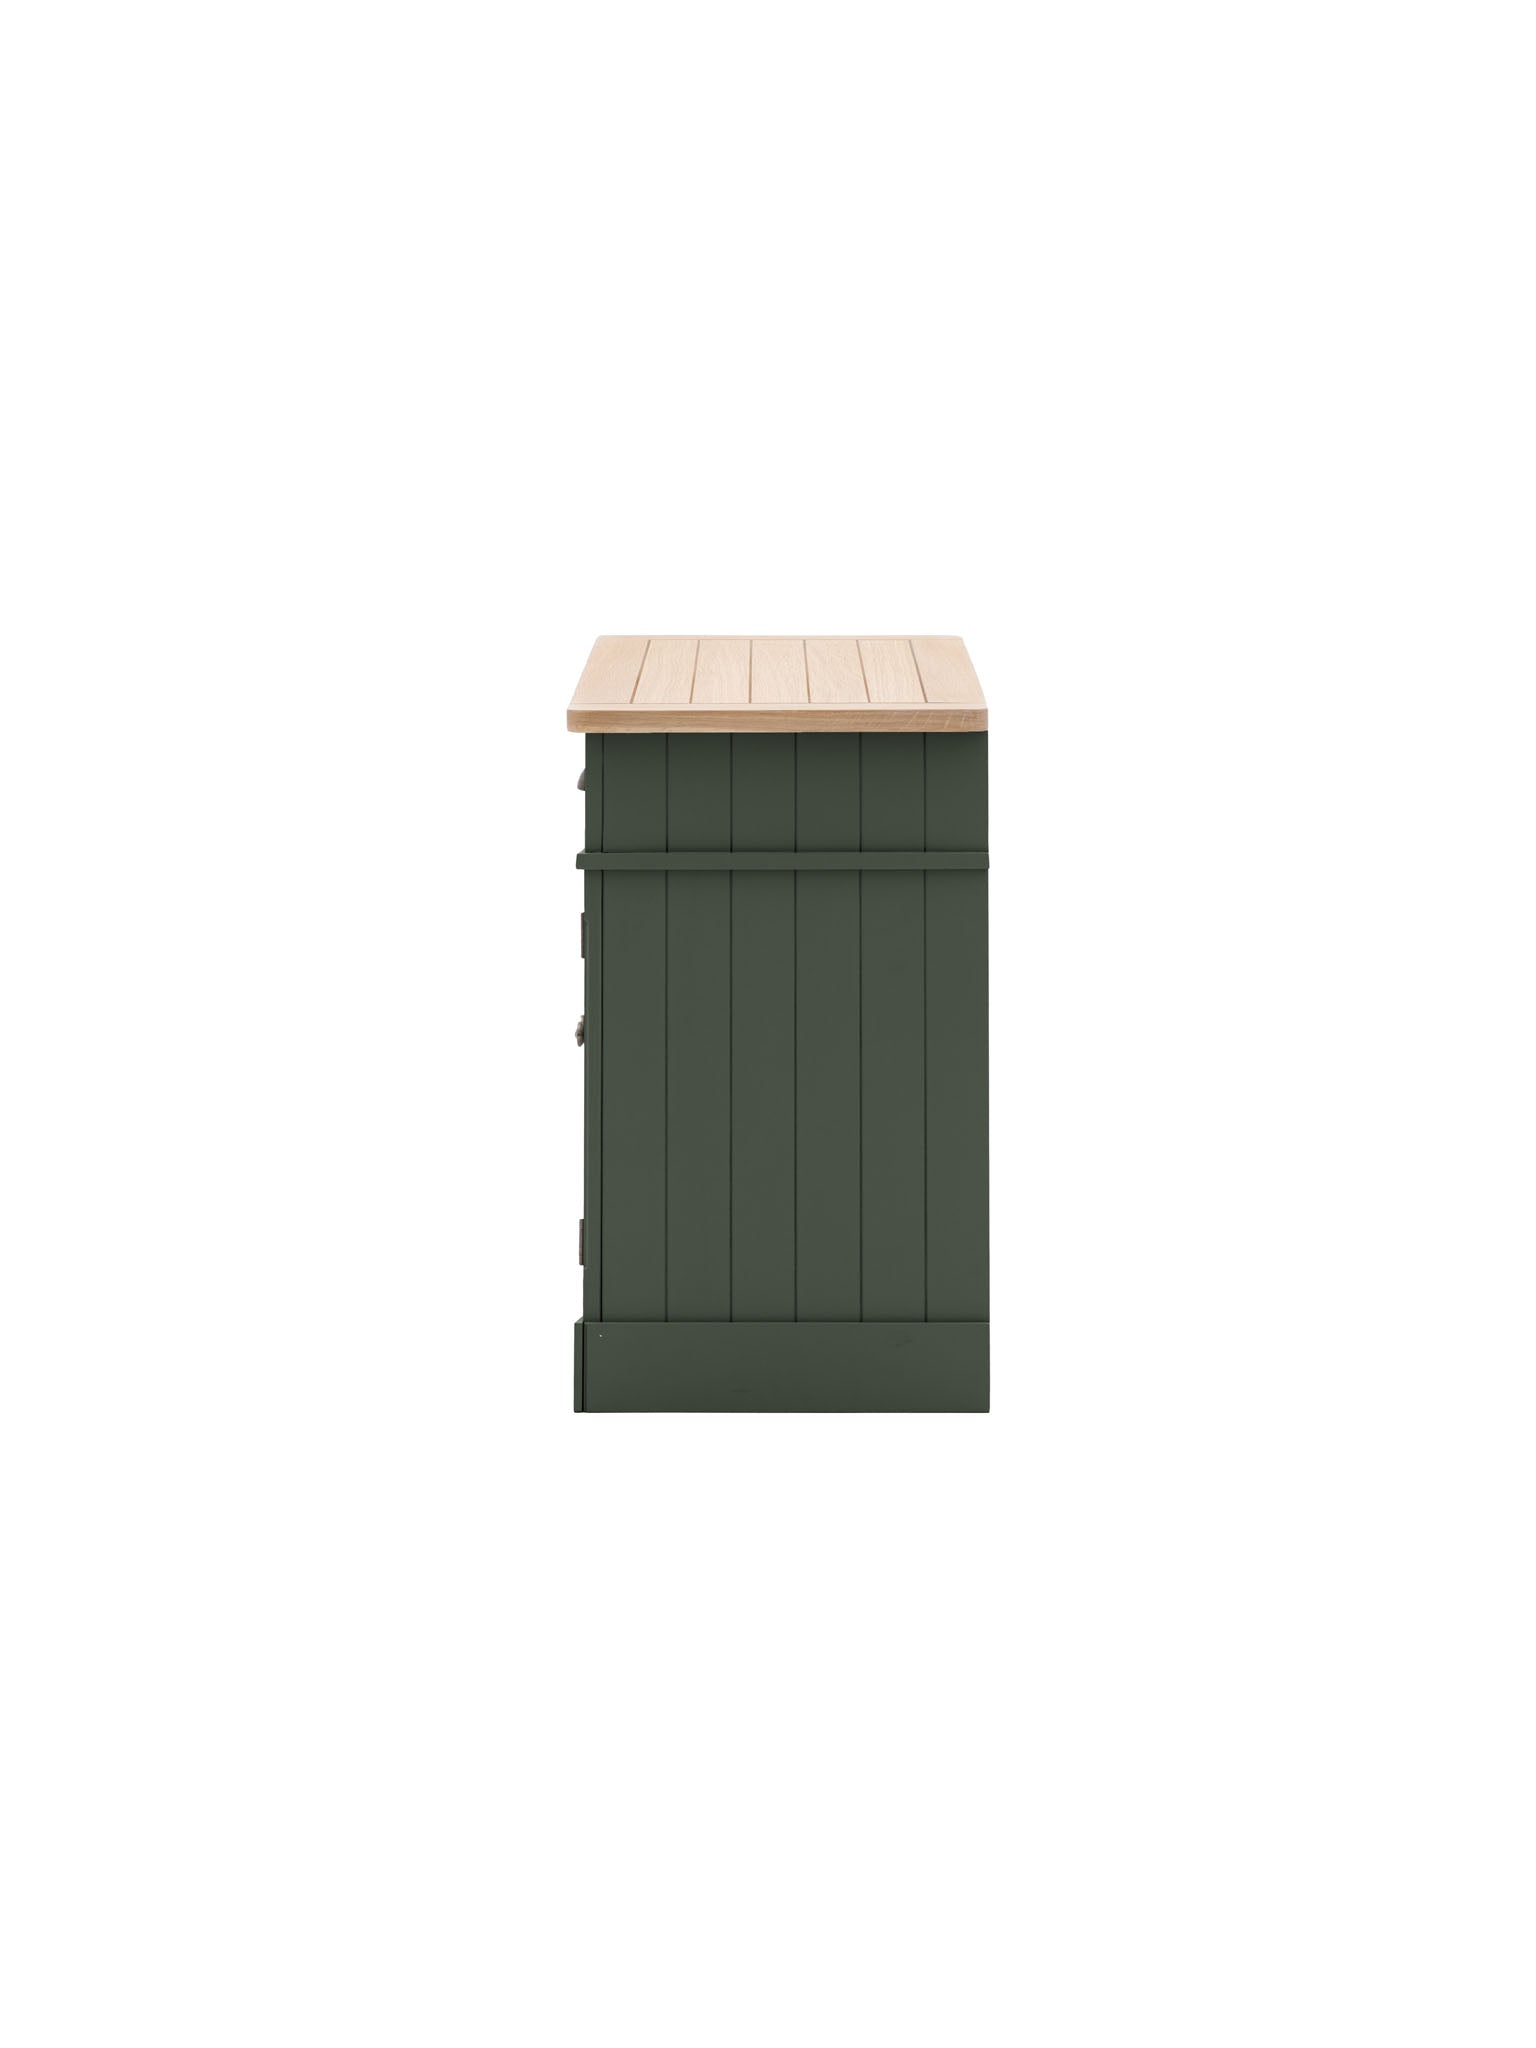 Farmhouse, oak top, 2 door cabinet, moss green